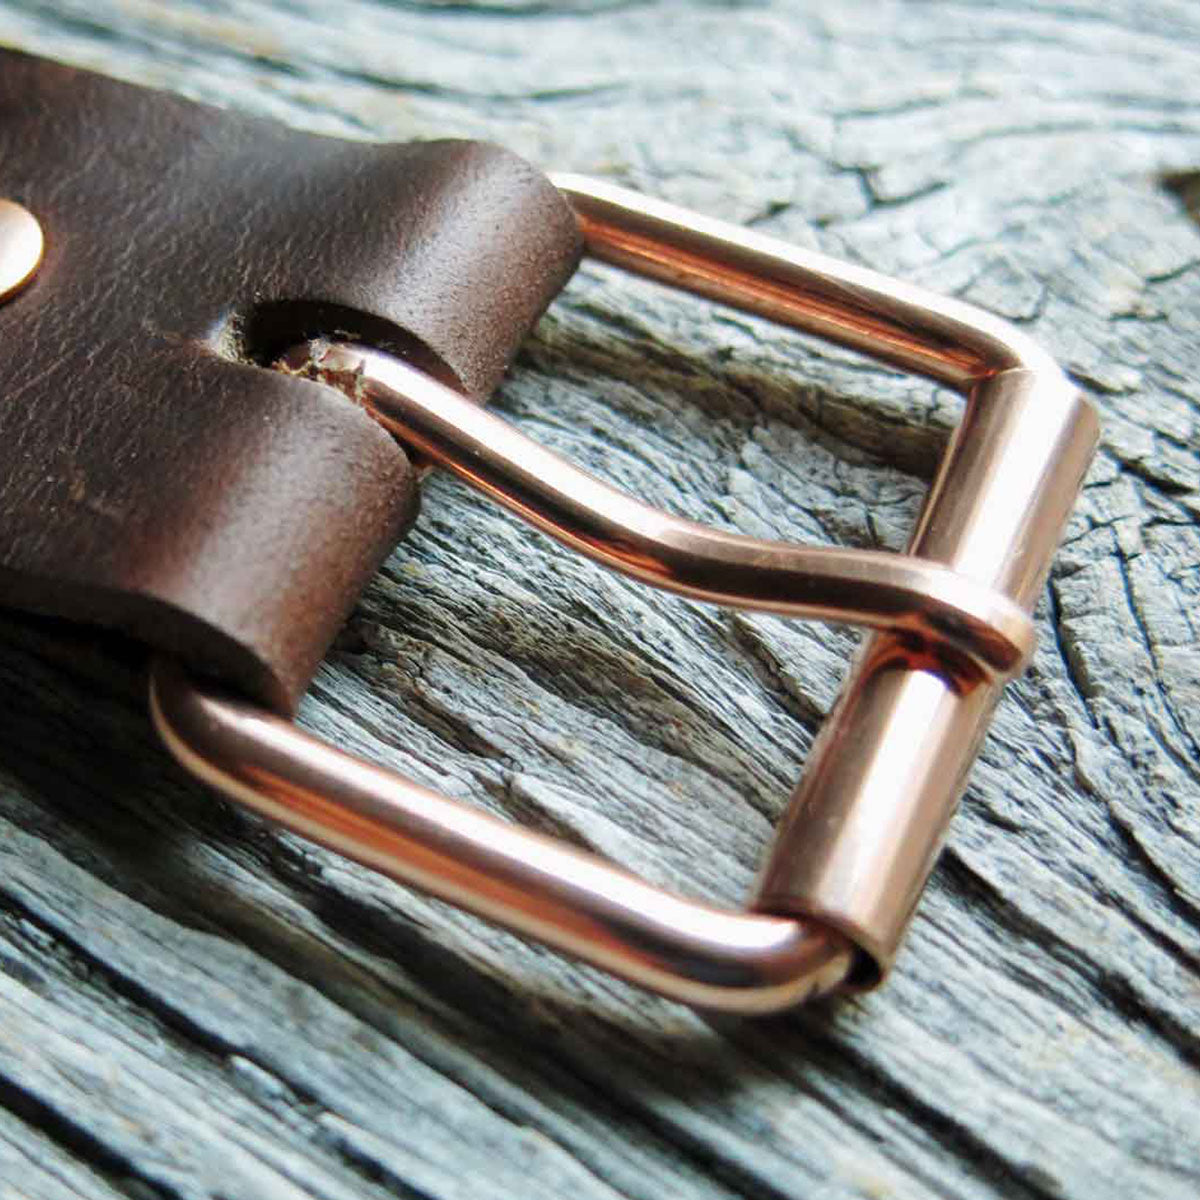 Copper Belt Buckle 1.5”